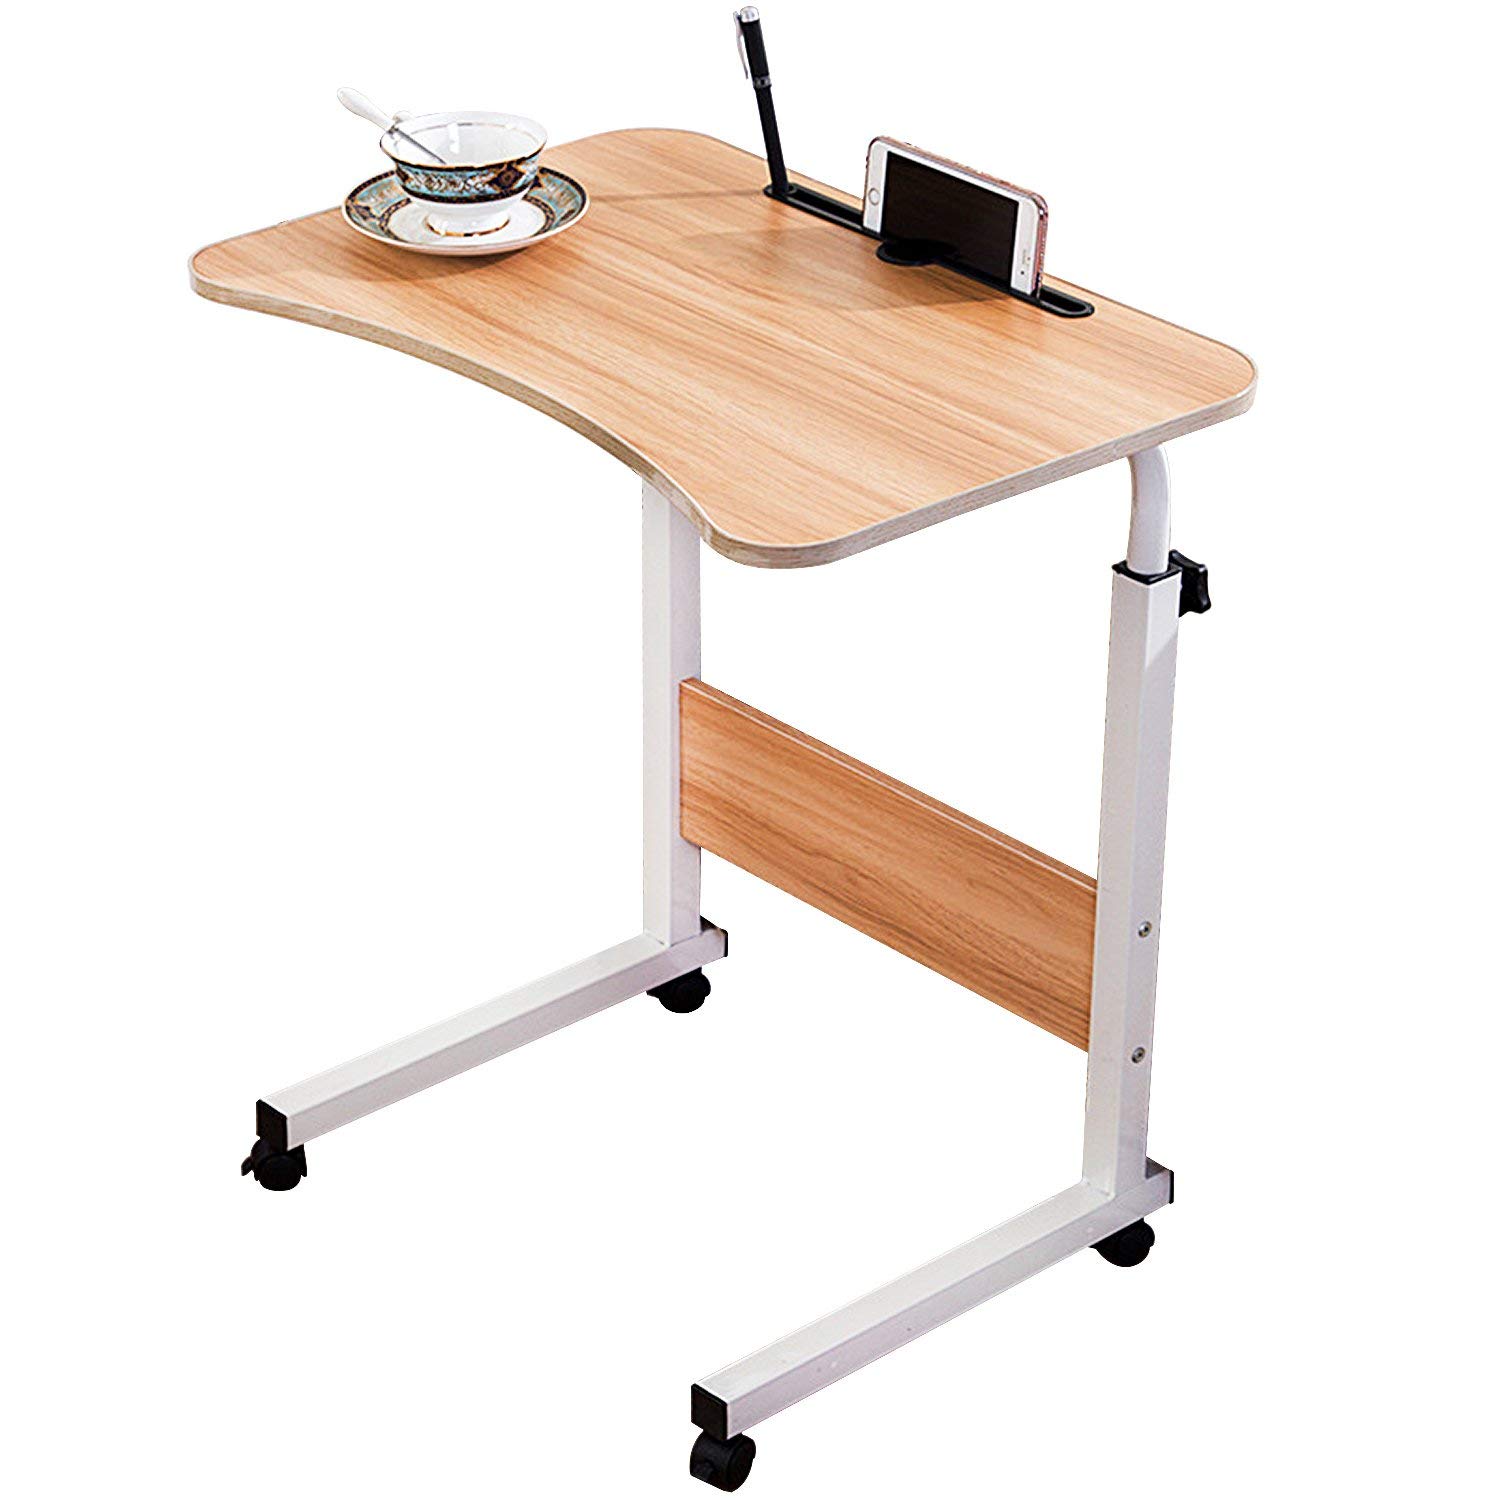 DL furniture - Adjustable Desk Body Curve Edge Design With Phone